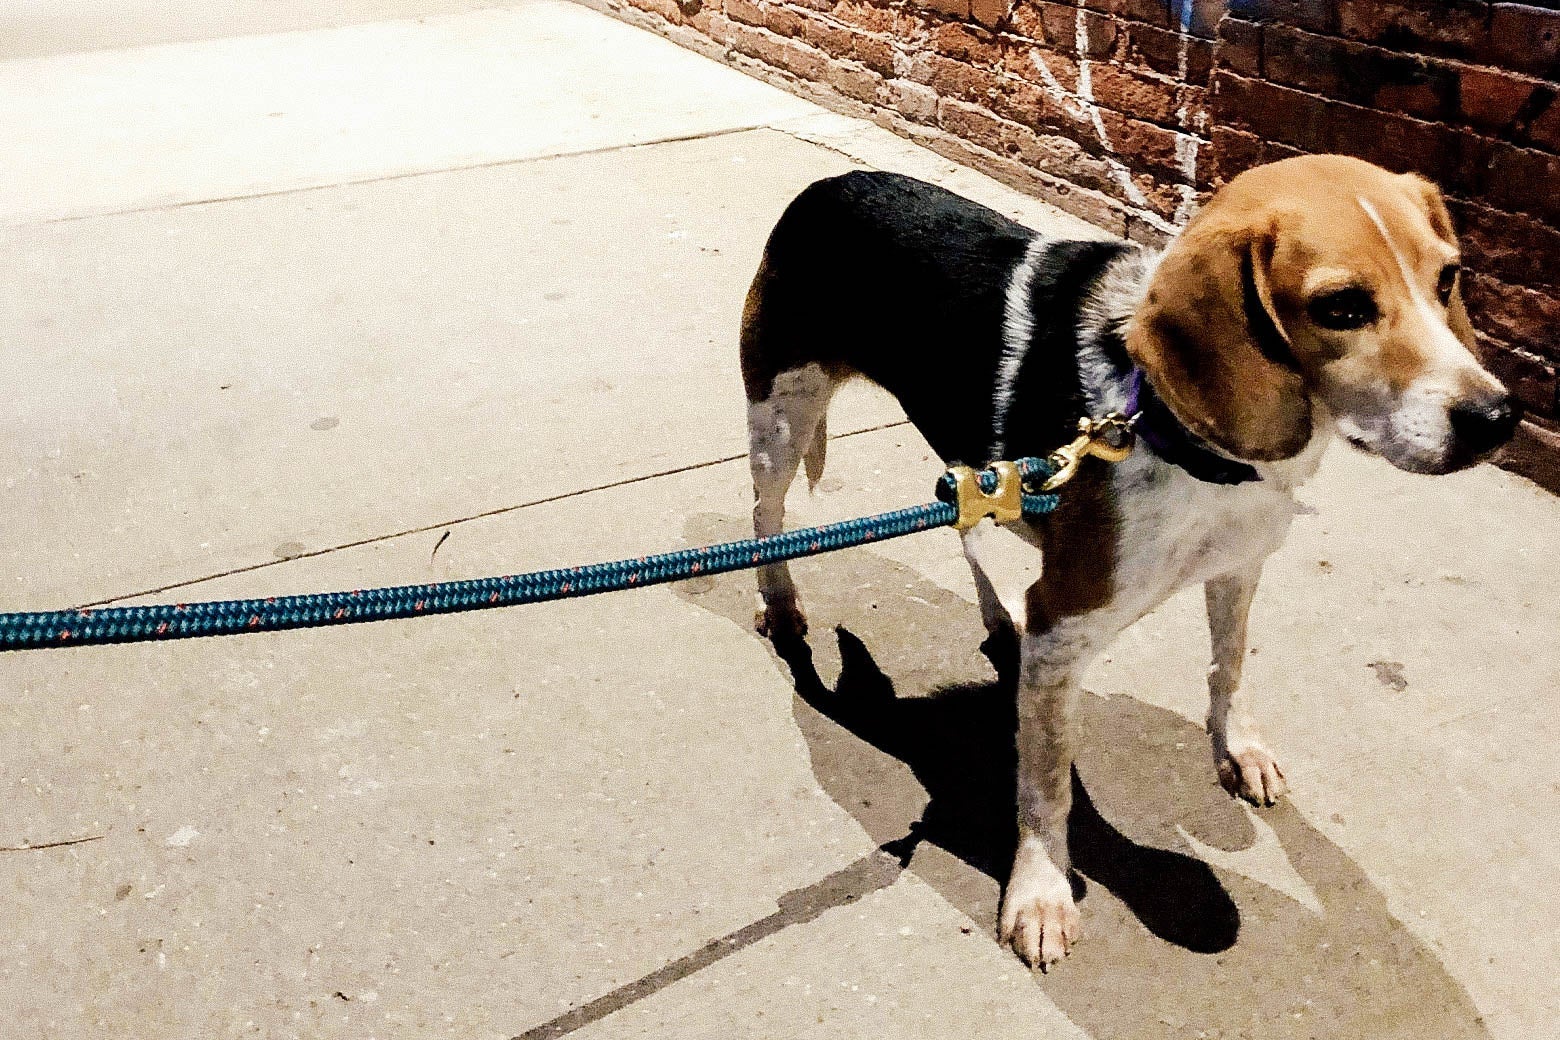 A beagle on a leash.